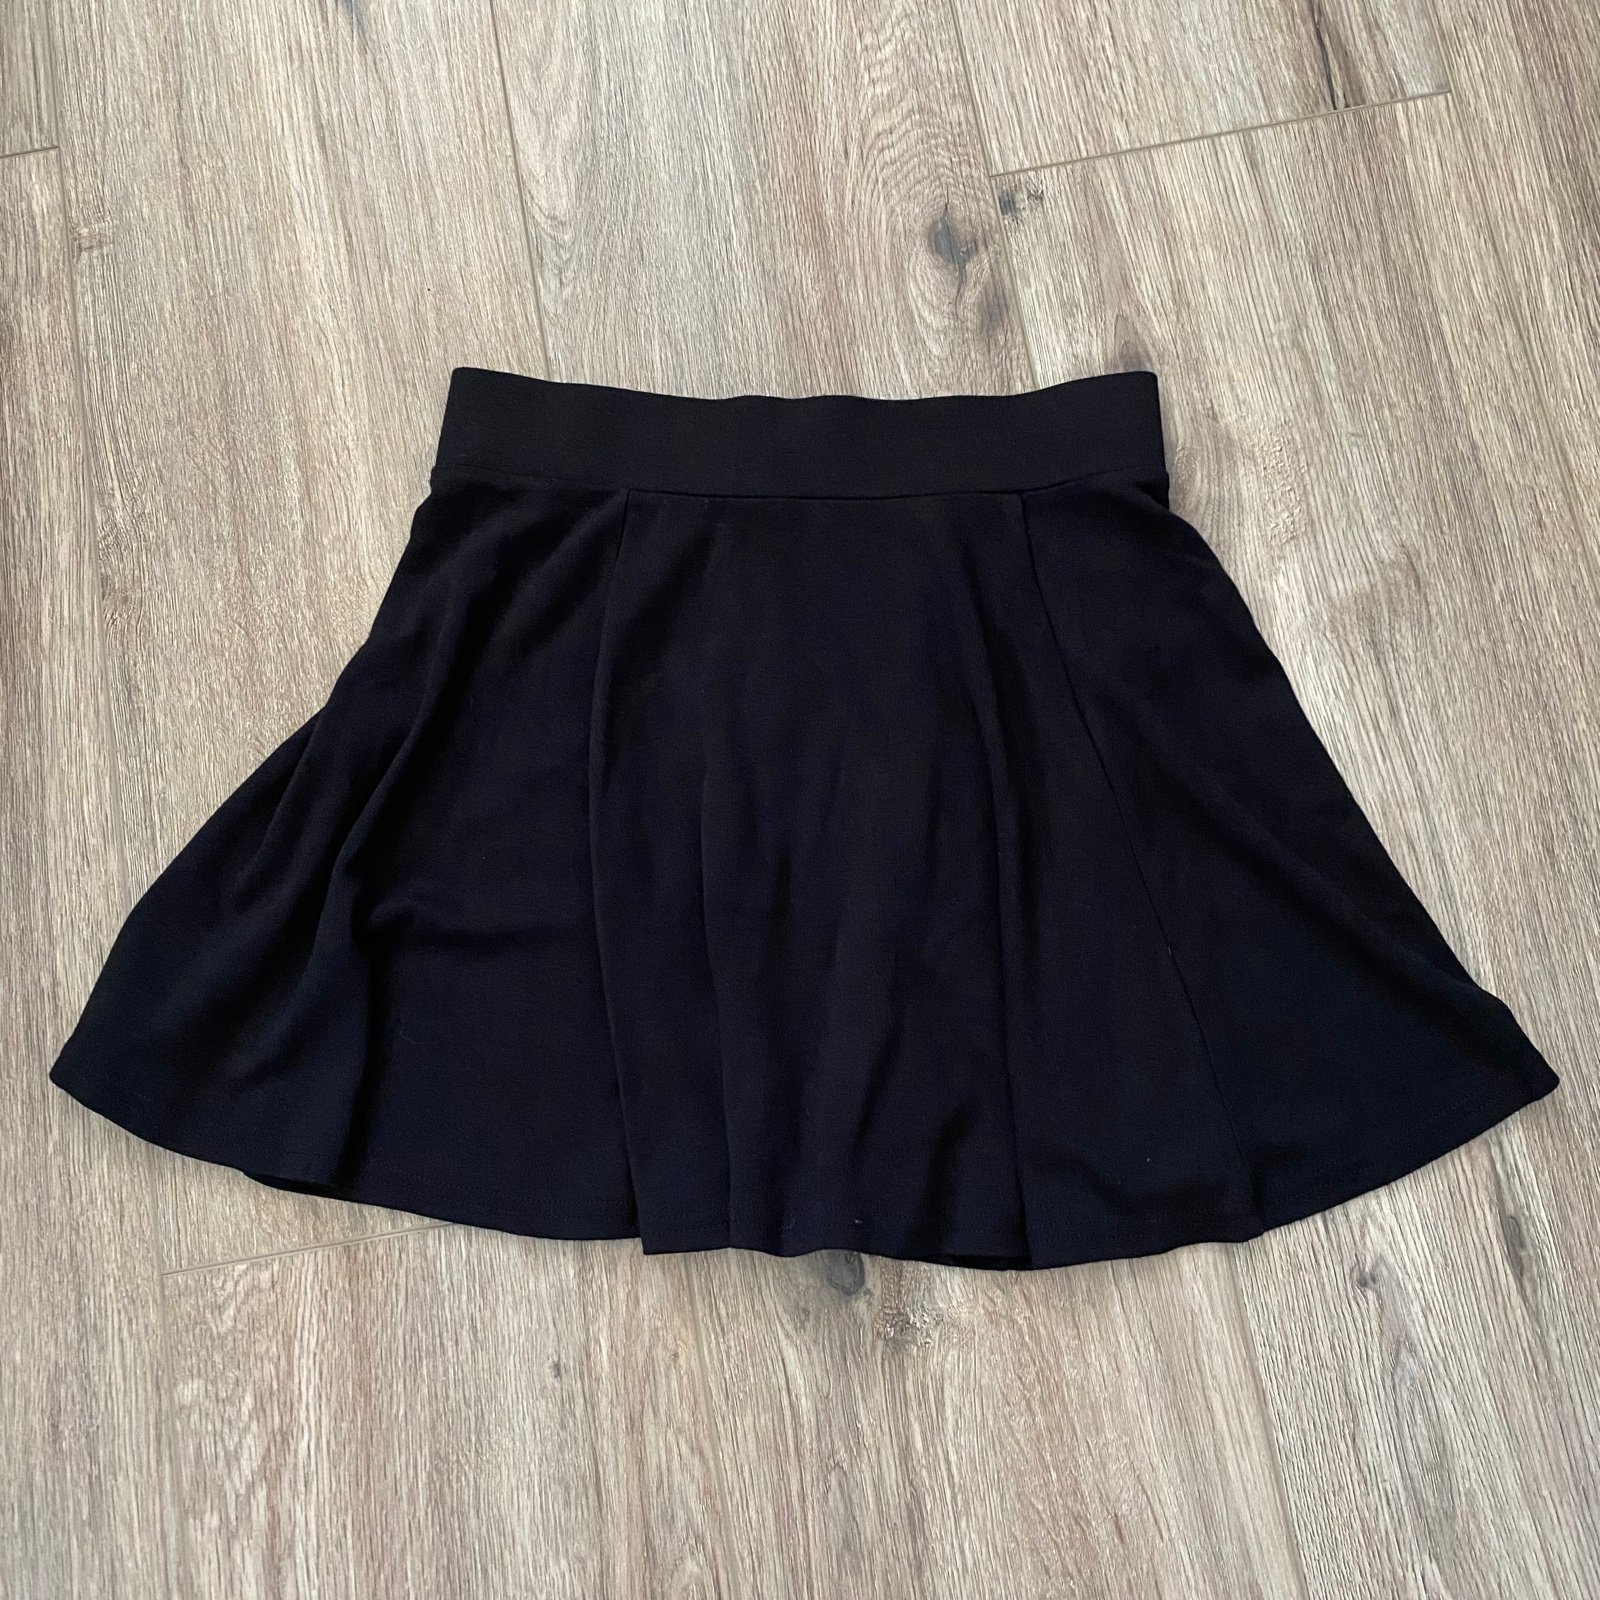 Nice Divided Black Women’s Small Skirt mYuhYr1Y6 Hot Sale